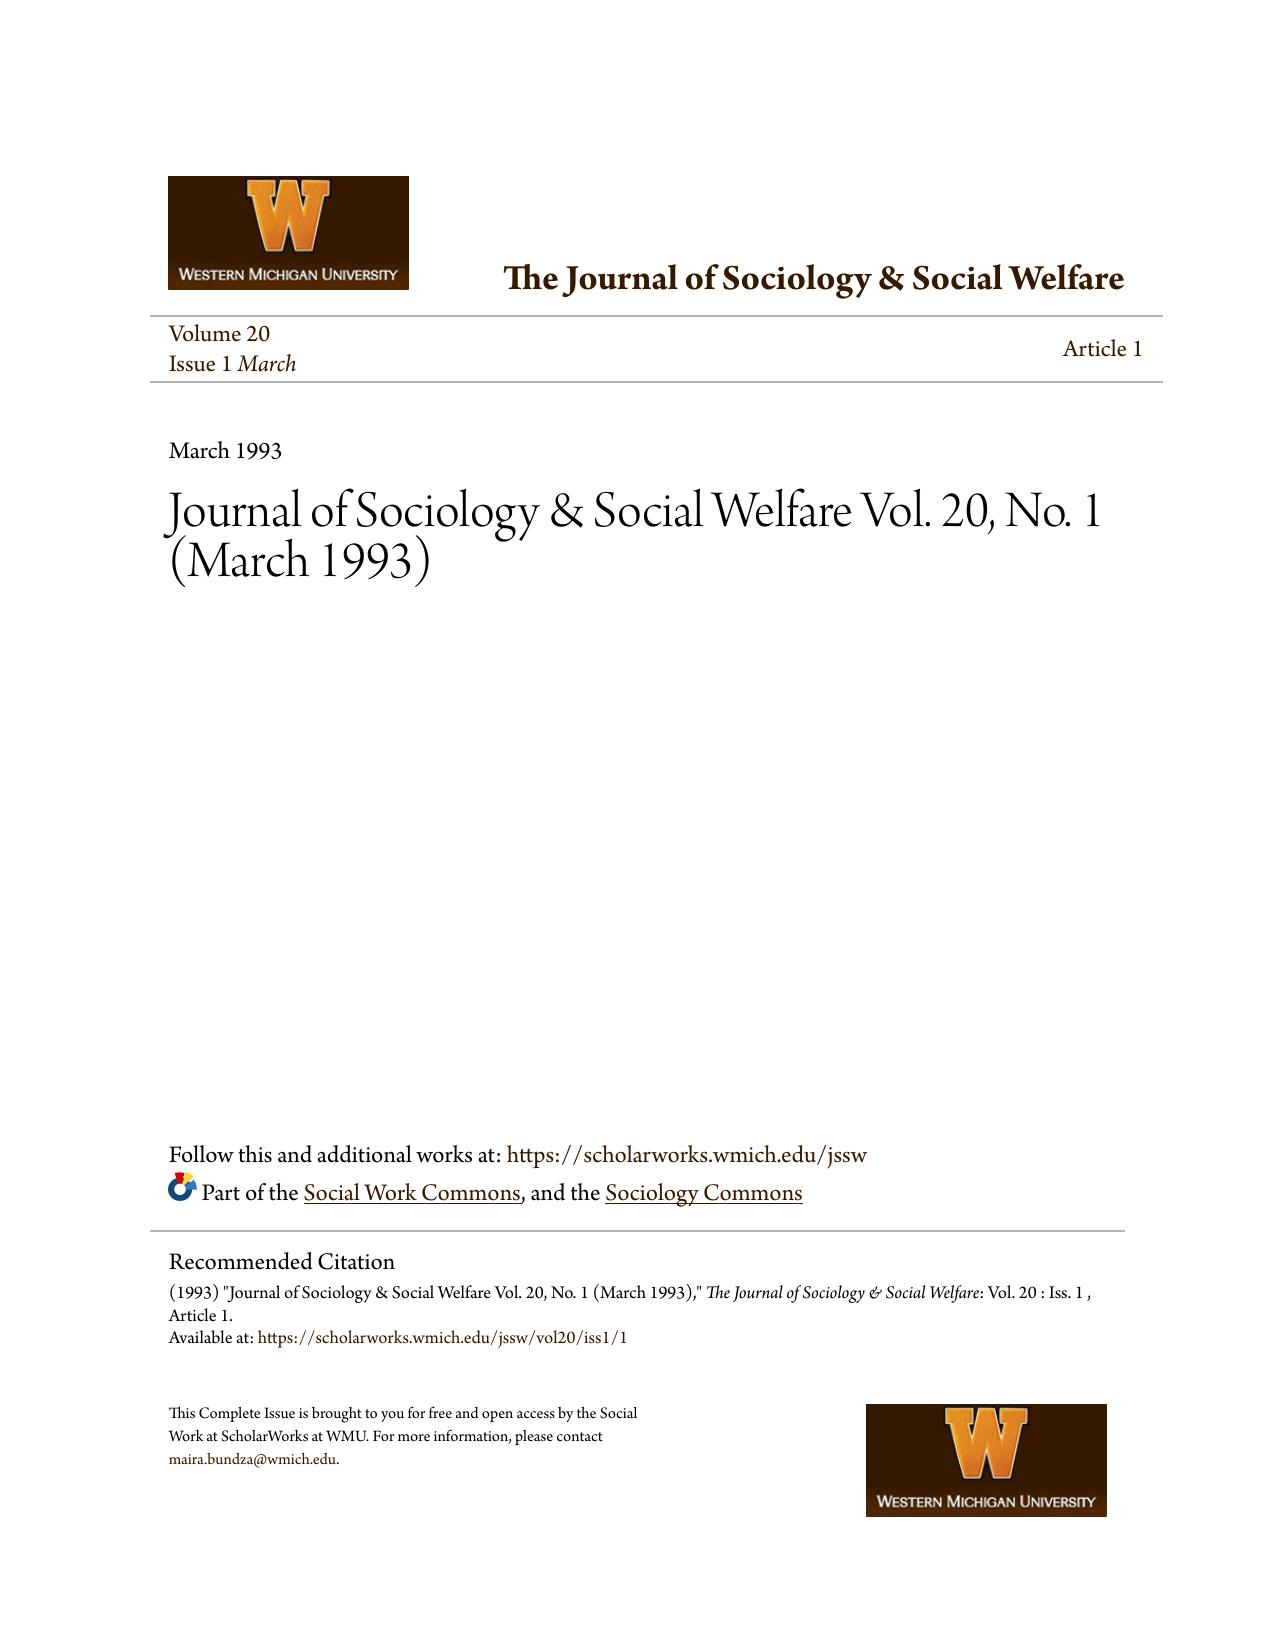 Journal of Sociology & Social Welfare Vol. 20, No. 1 (March 1993)